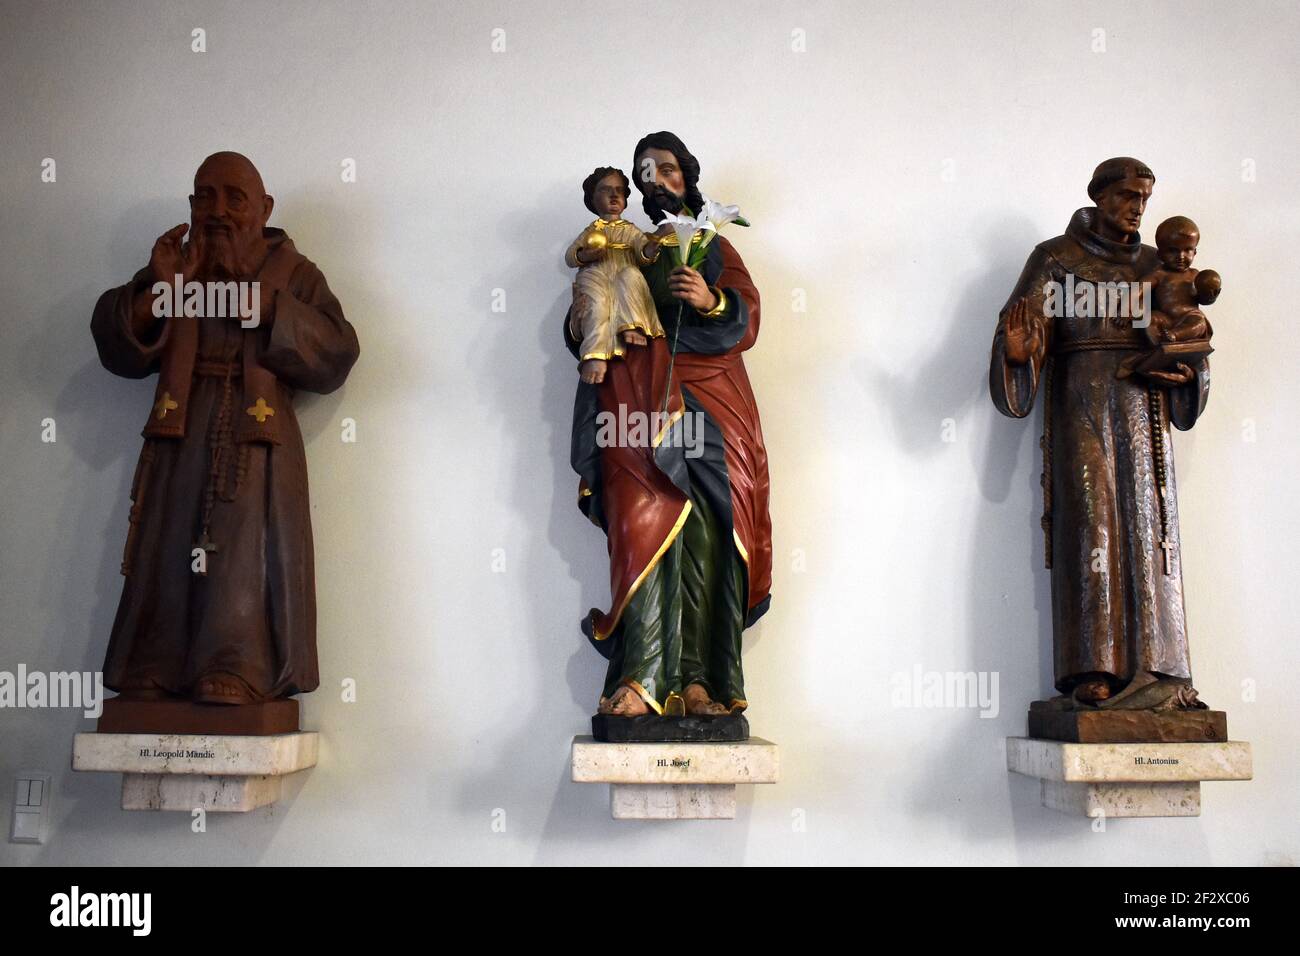 Catholic parish of St. Peter and Paul. Statues of saints. Stock Photo